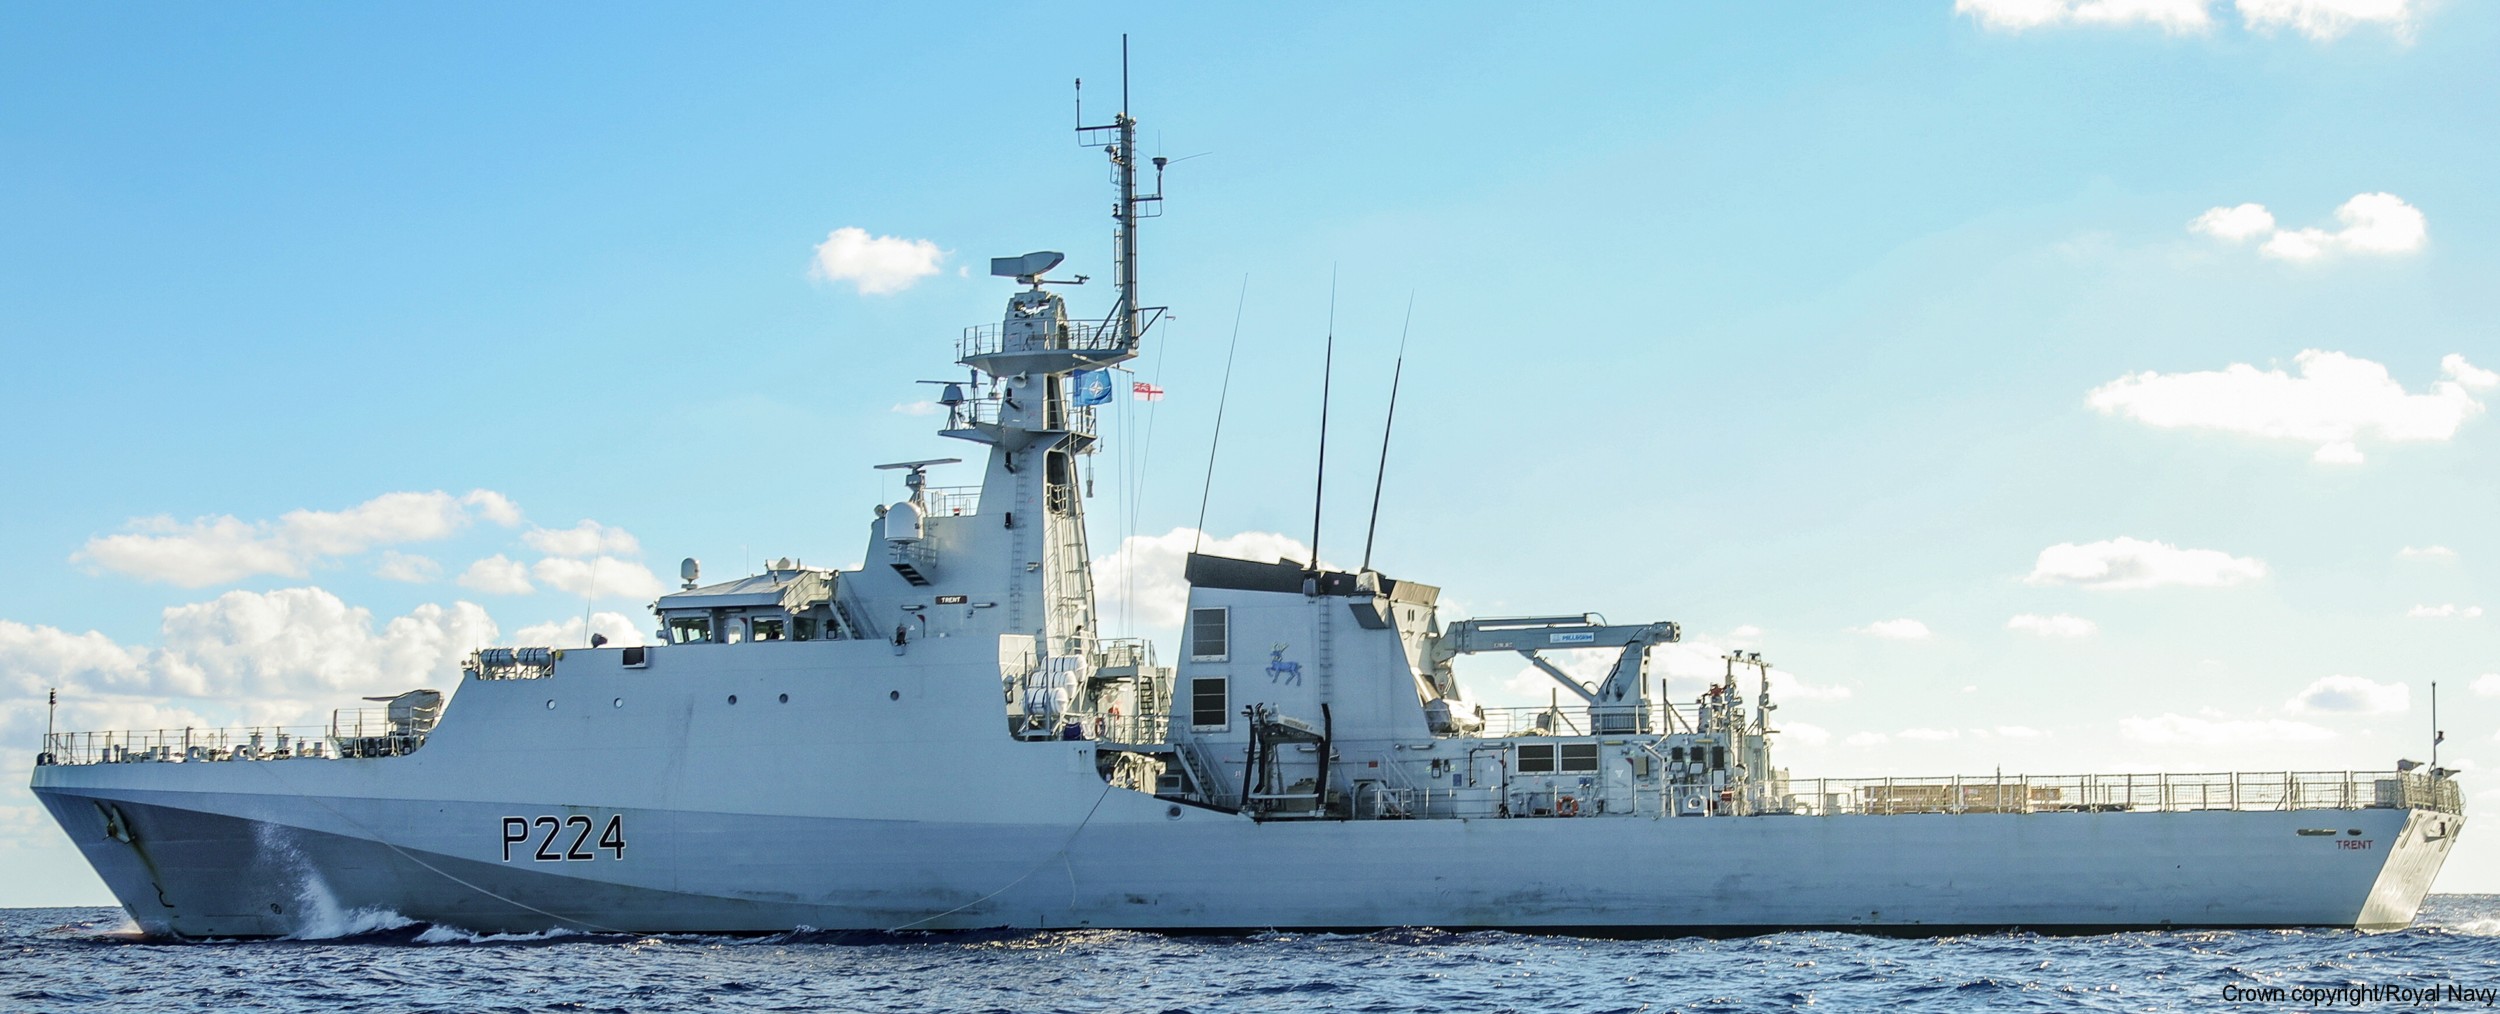 p-224 hms trent river class offshore patrol vessel opv royal navy 18